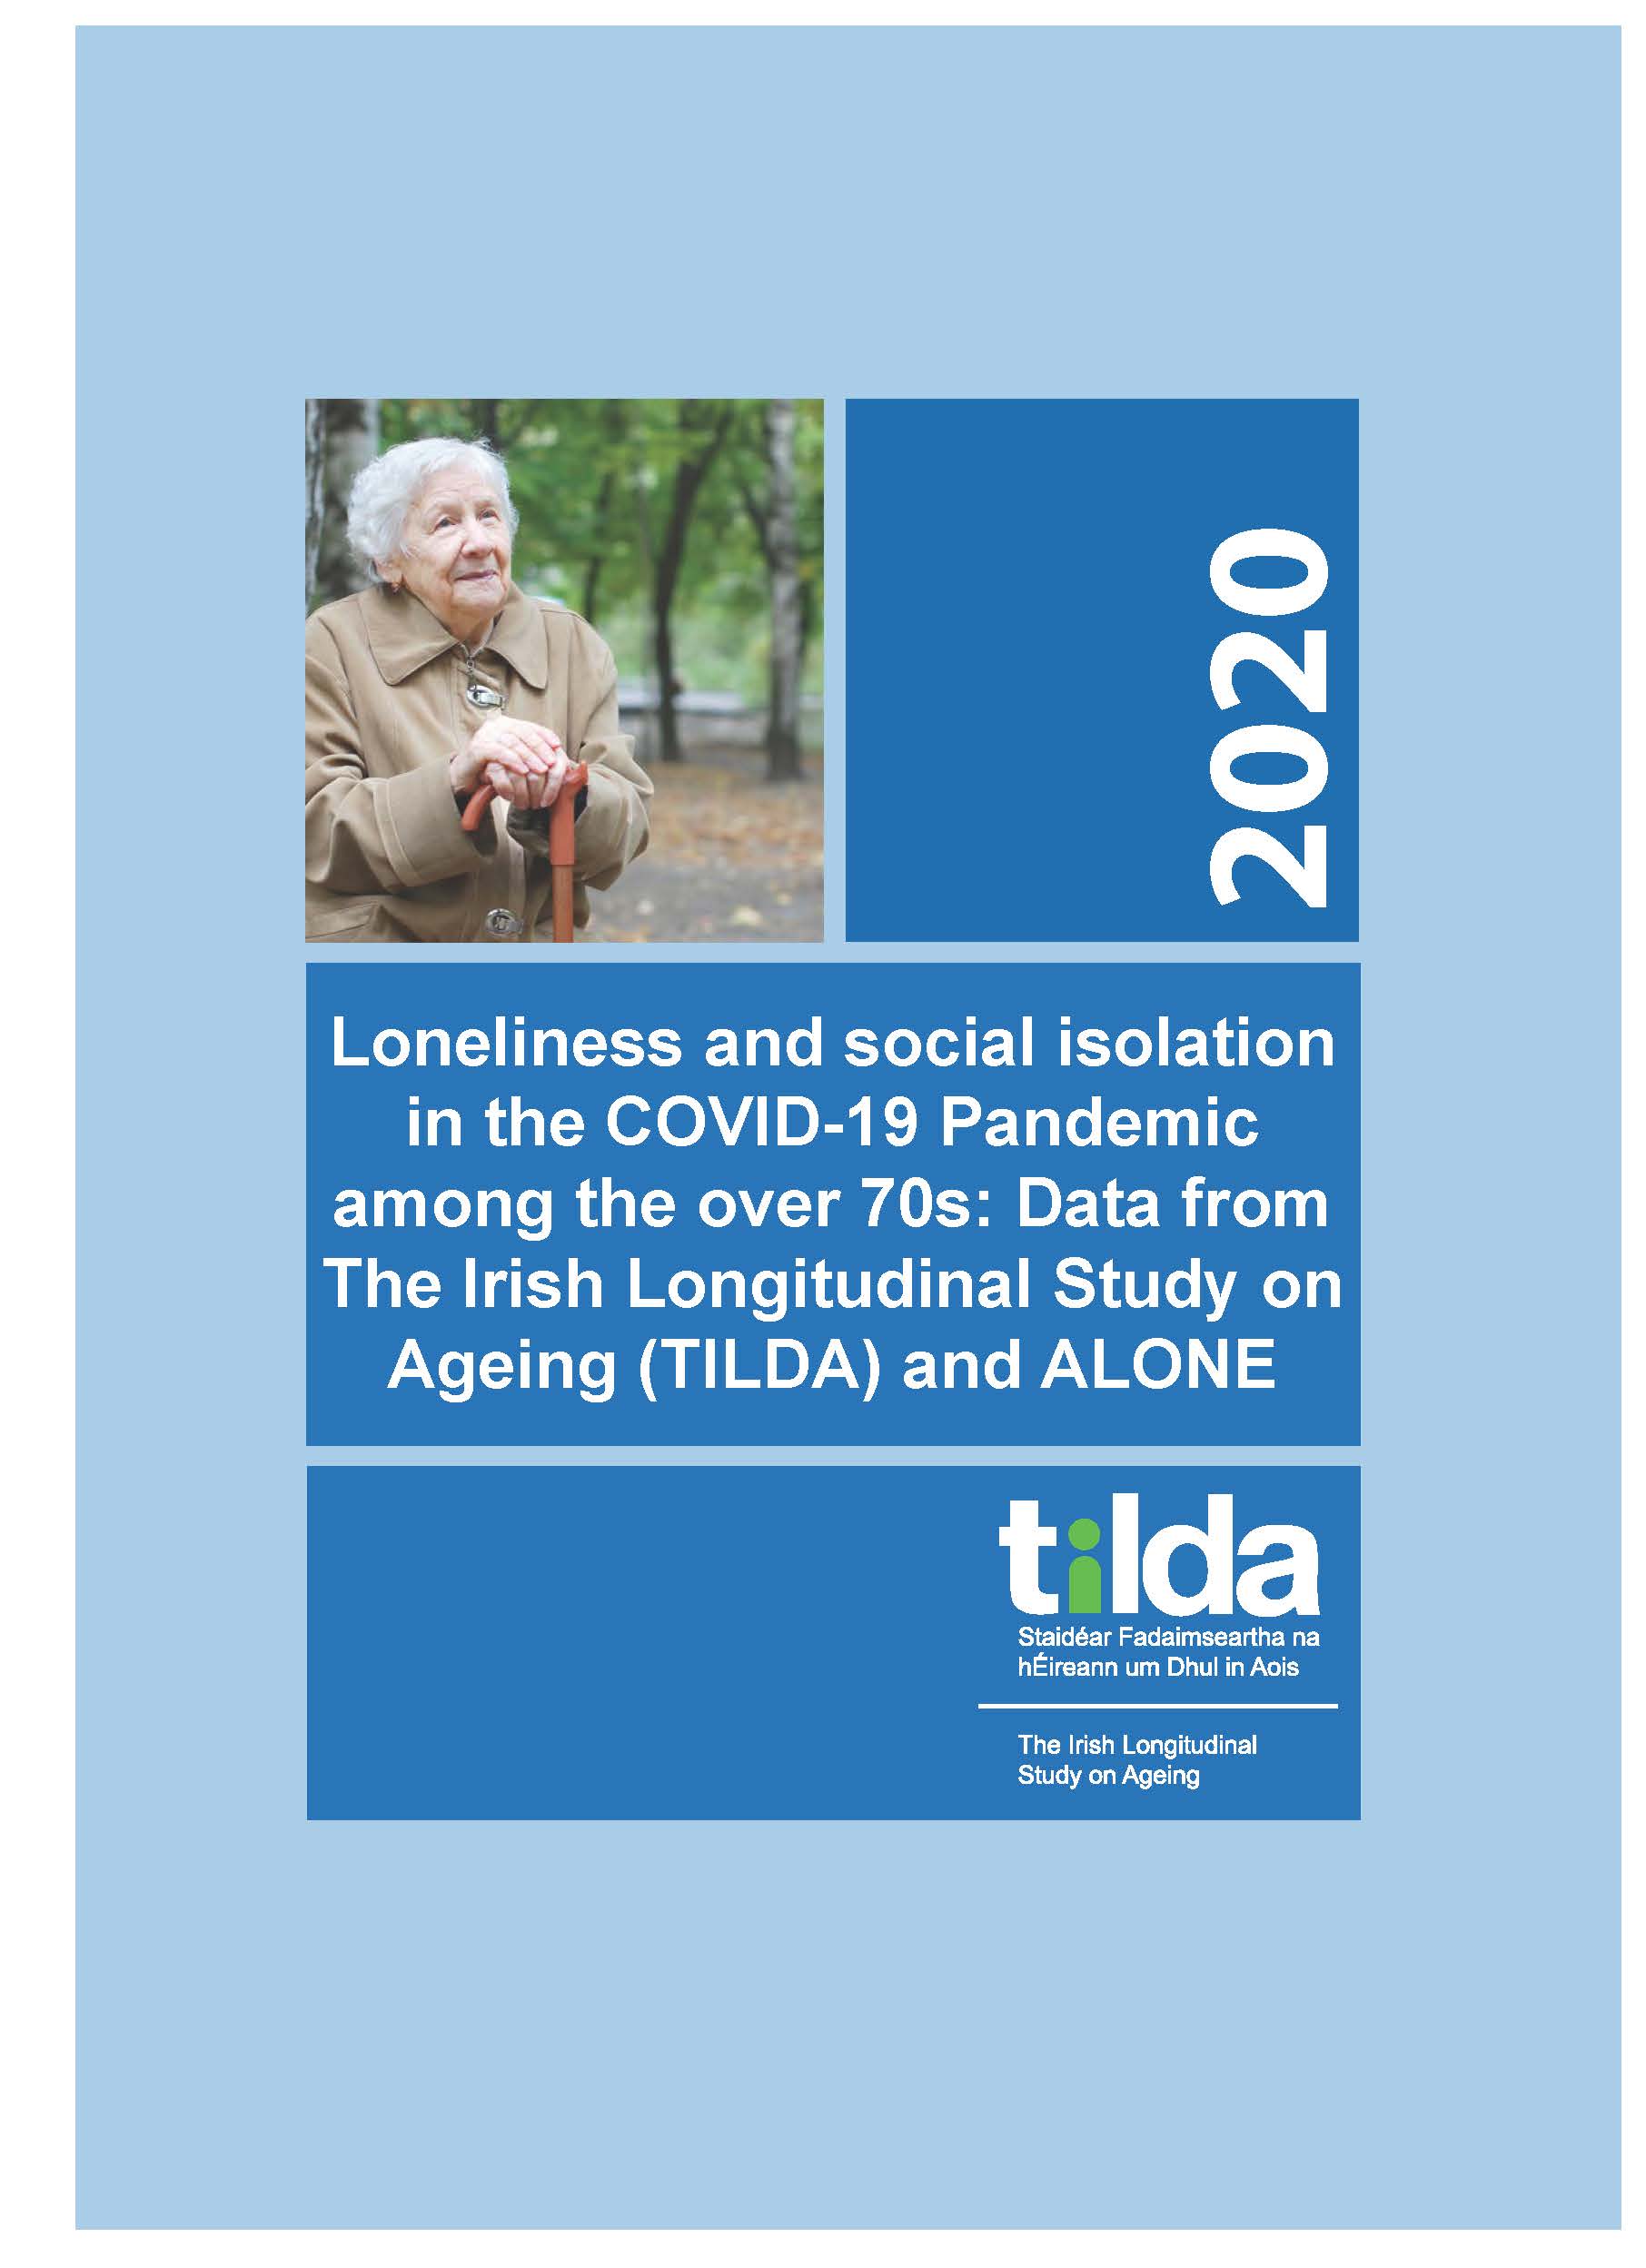 Covid-19 Social Isolation Report